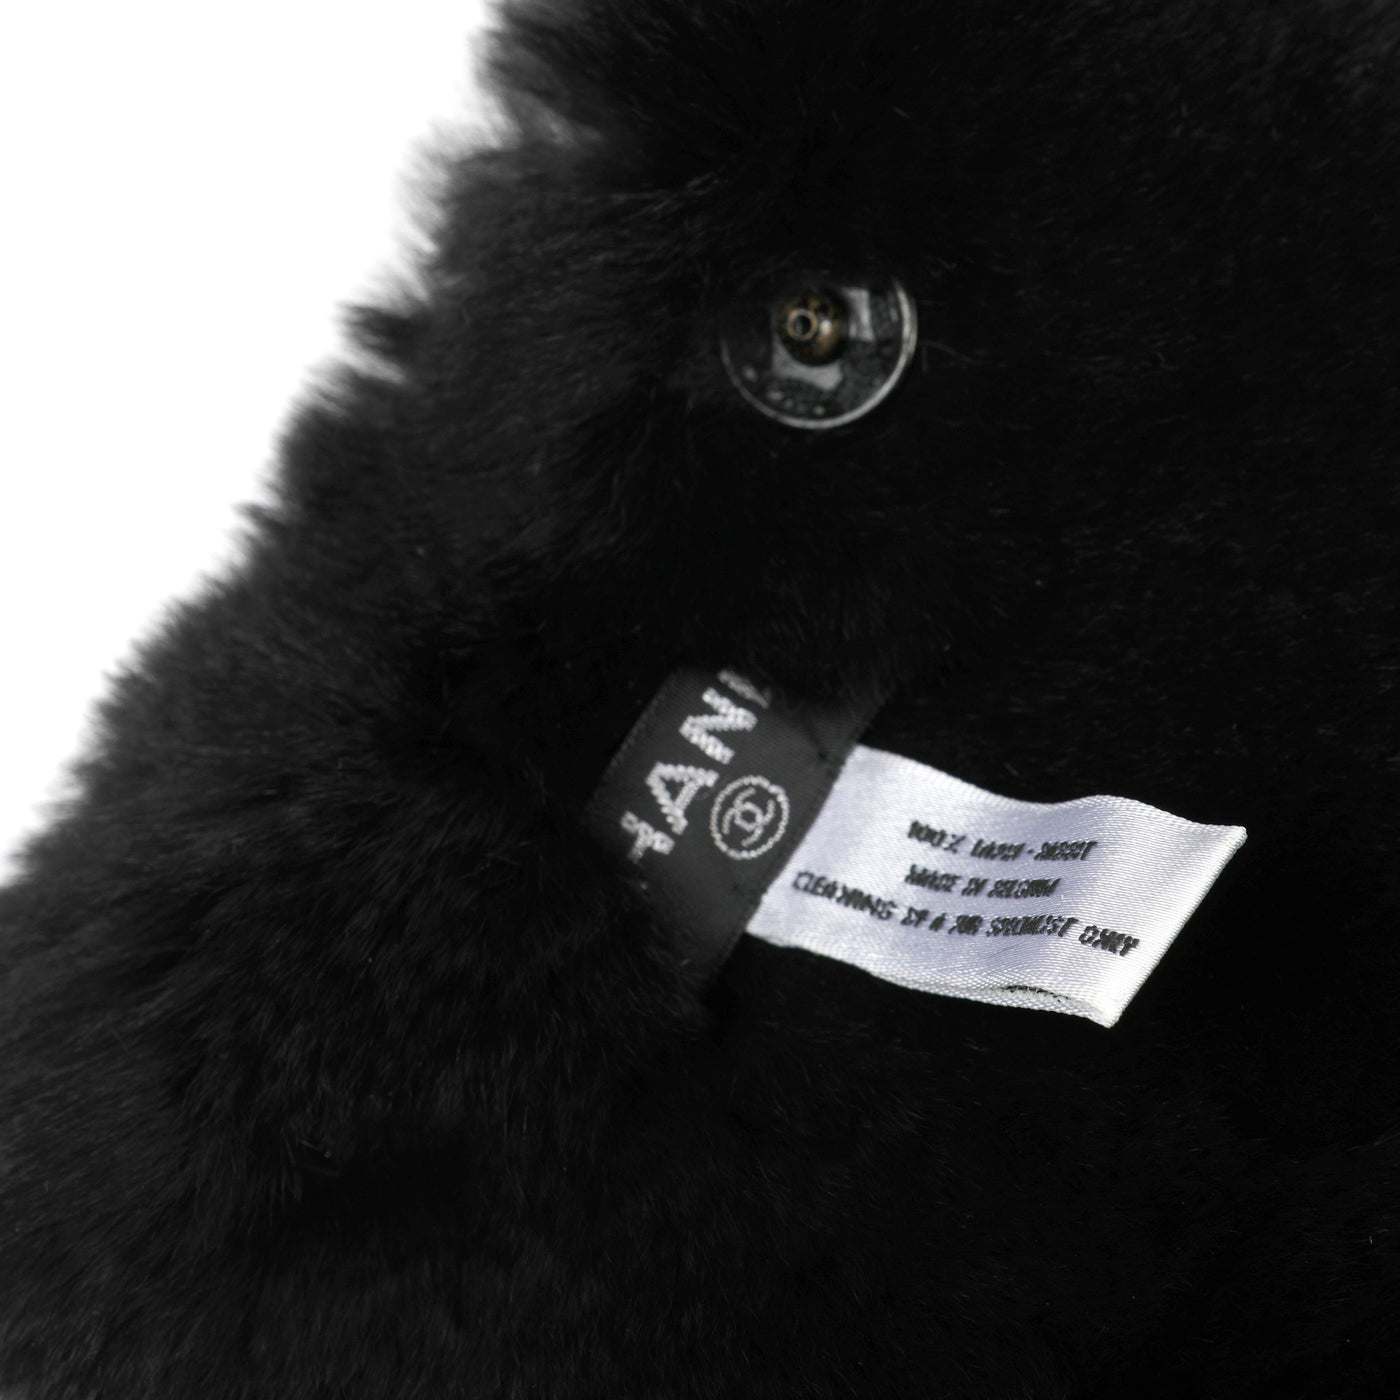 Chanel Black Rabbit Fur Neck Collar w/ CC Pearl Strands